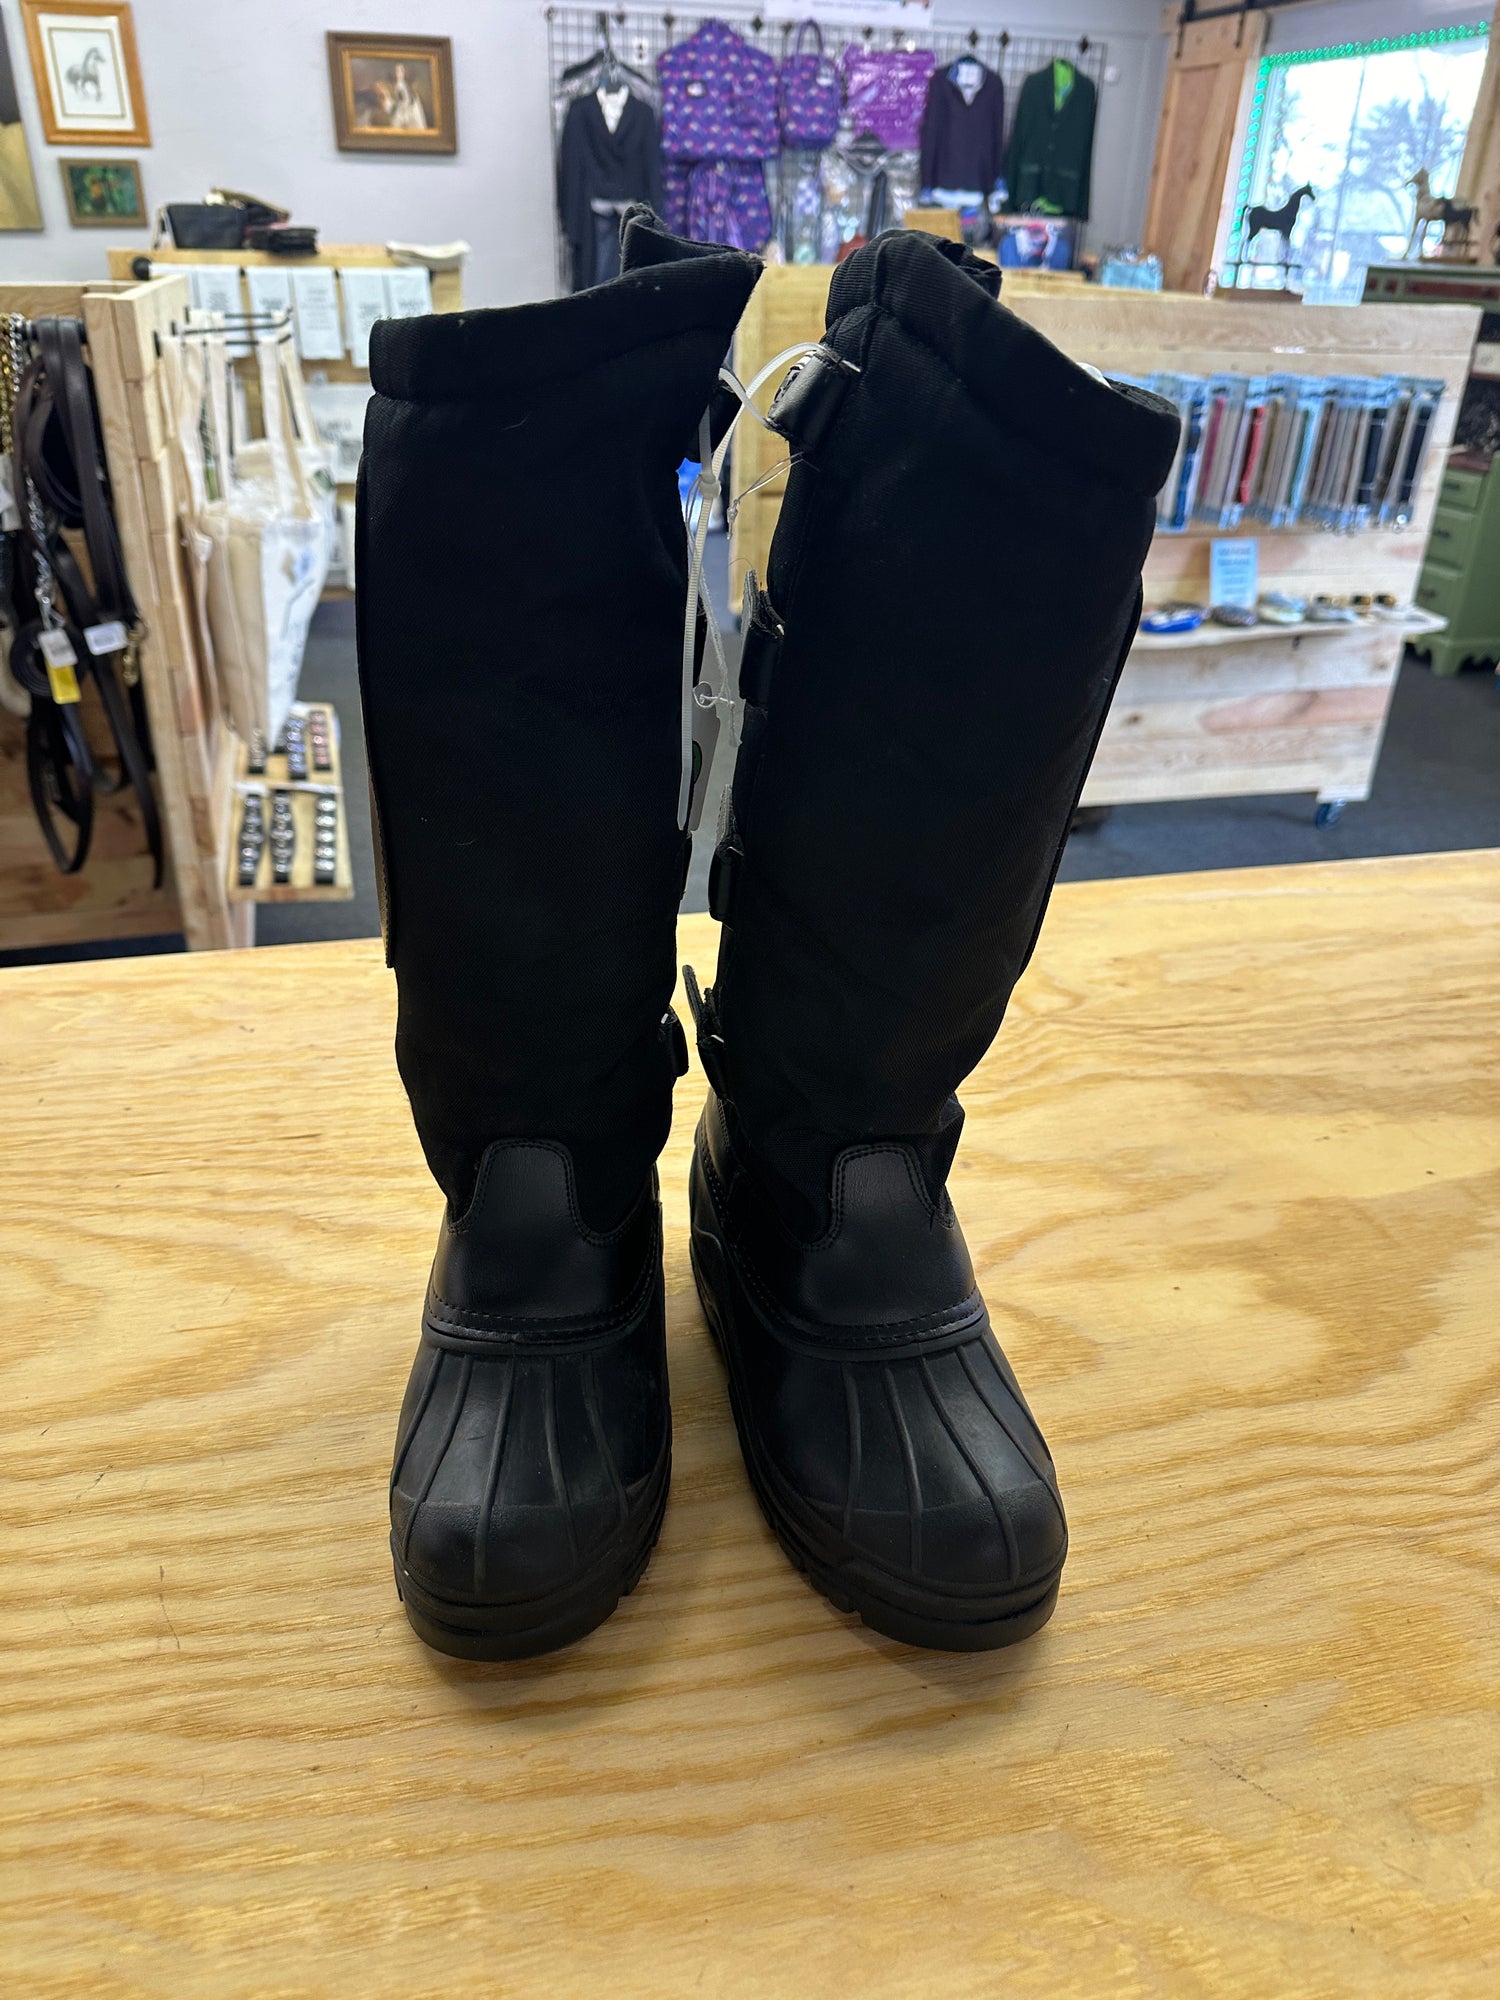 Women's Winter Riding Boots - Ovation Size 7.5